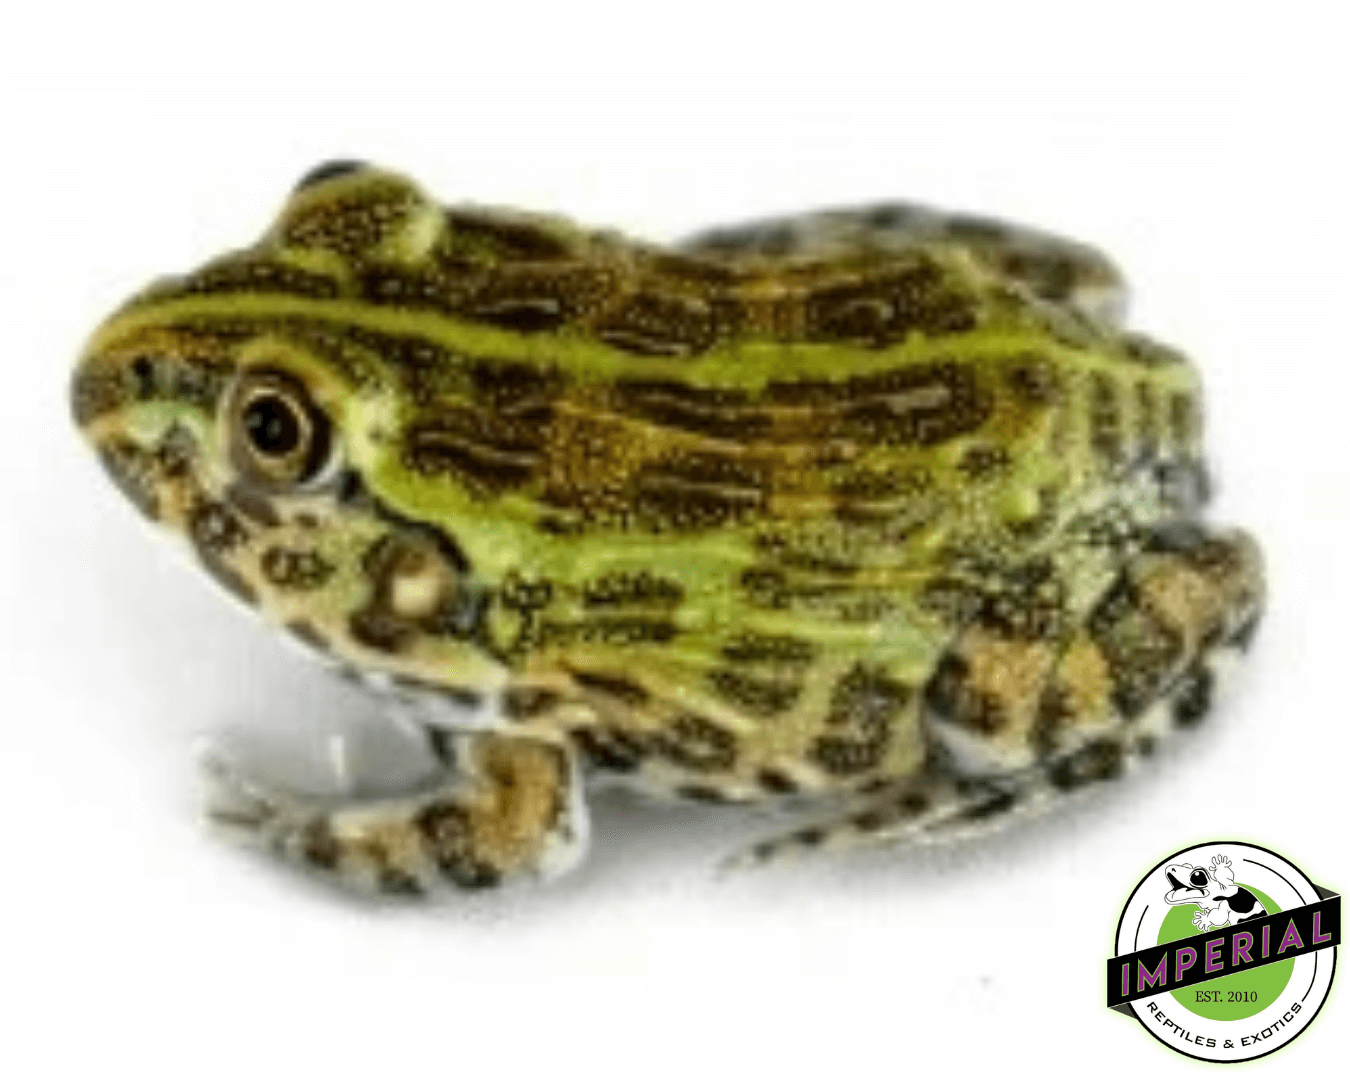 giant pixie frog for sale, buy amphibians online